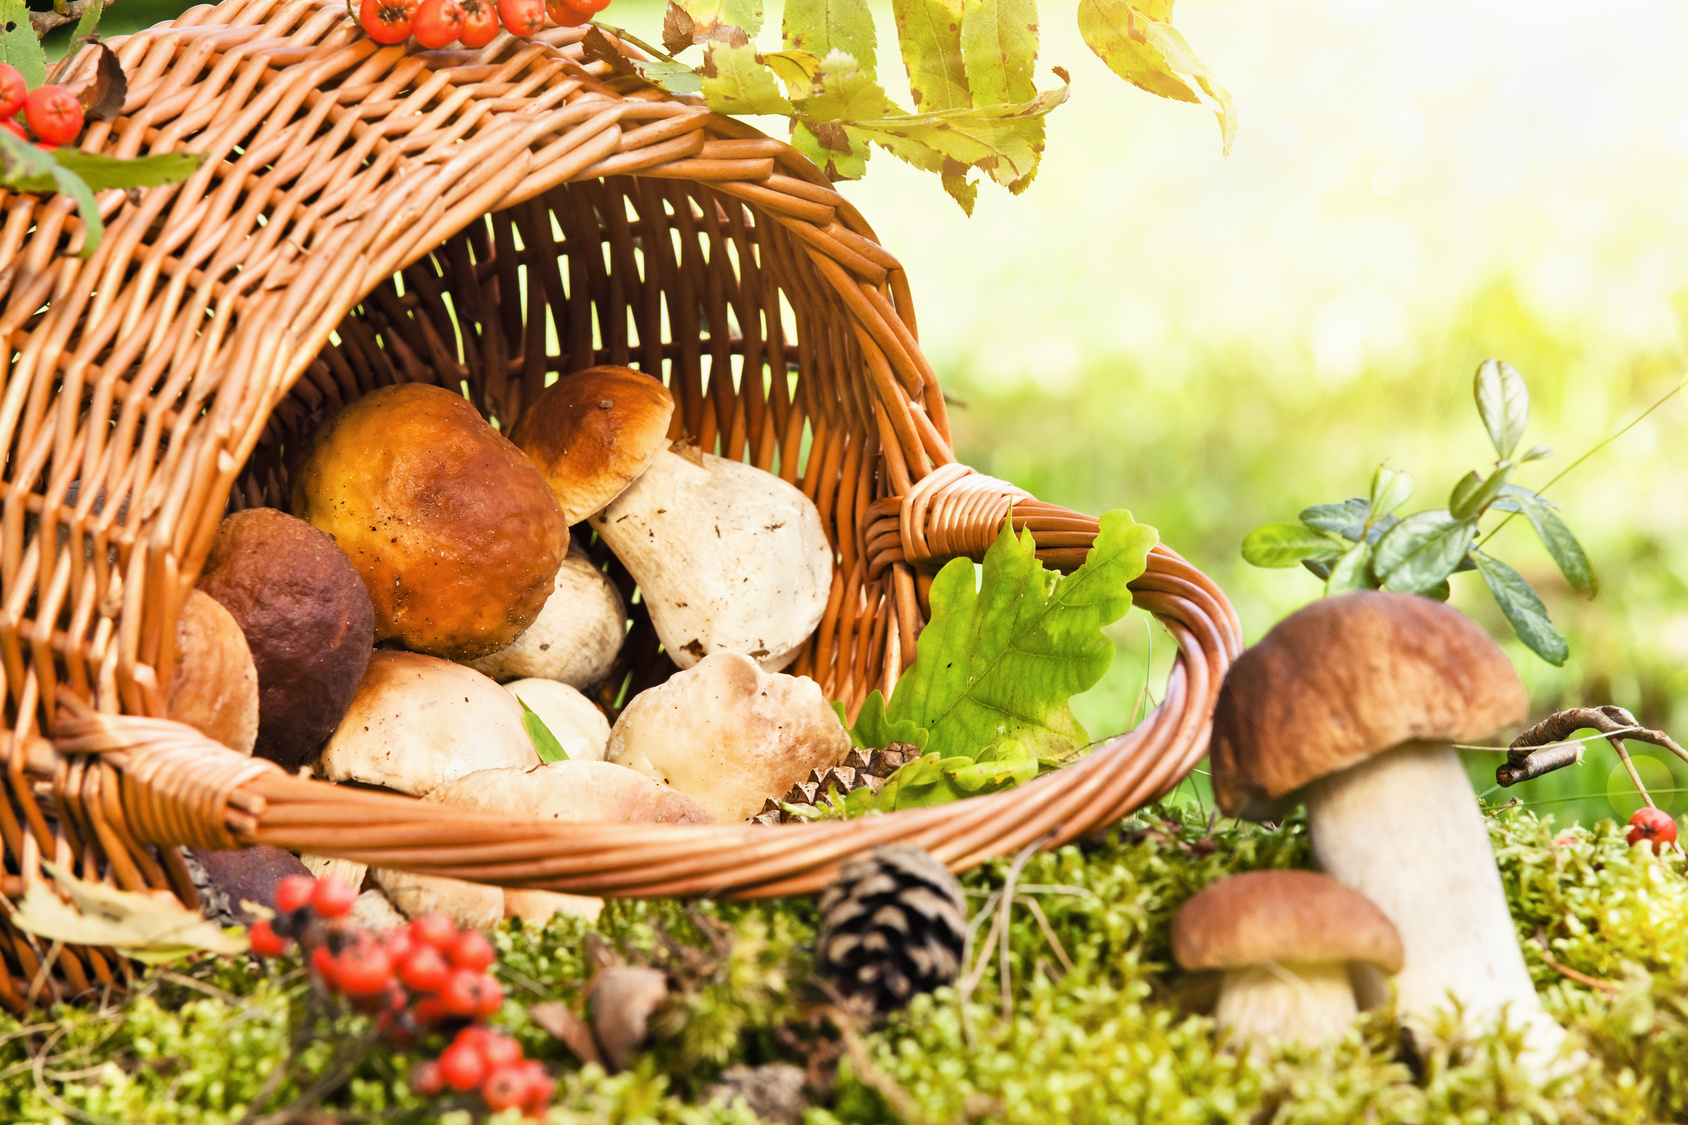 Basket with mushrooms